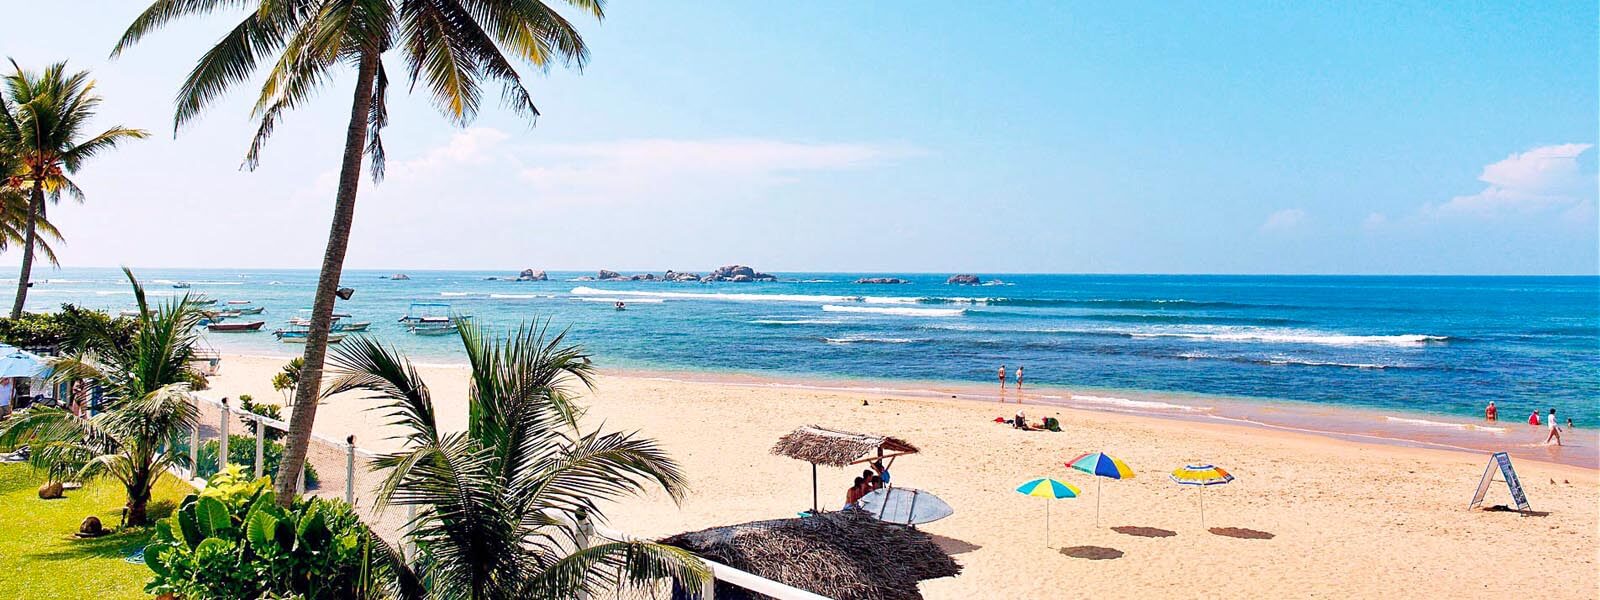 Best Beach Holiday in Sri Lanka